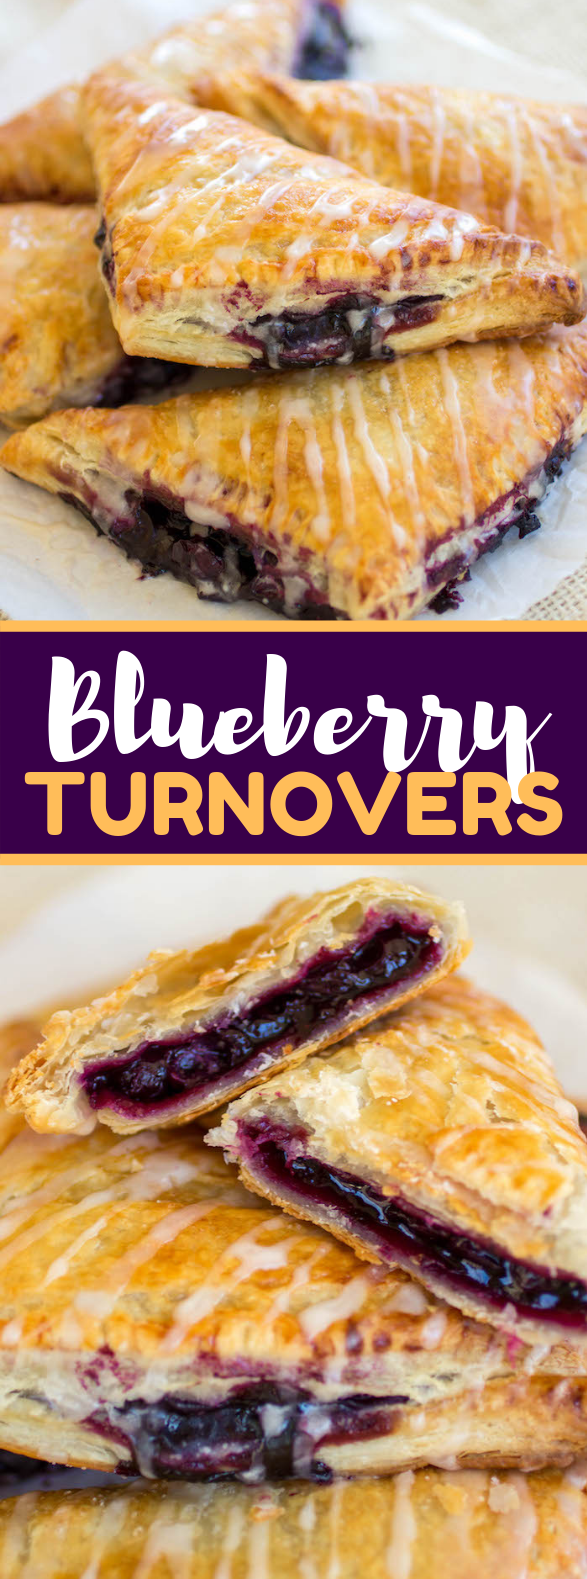 BLUEBERRY TURNOVERS #desserts #cake